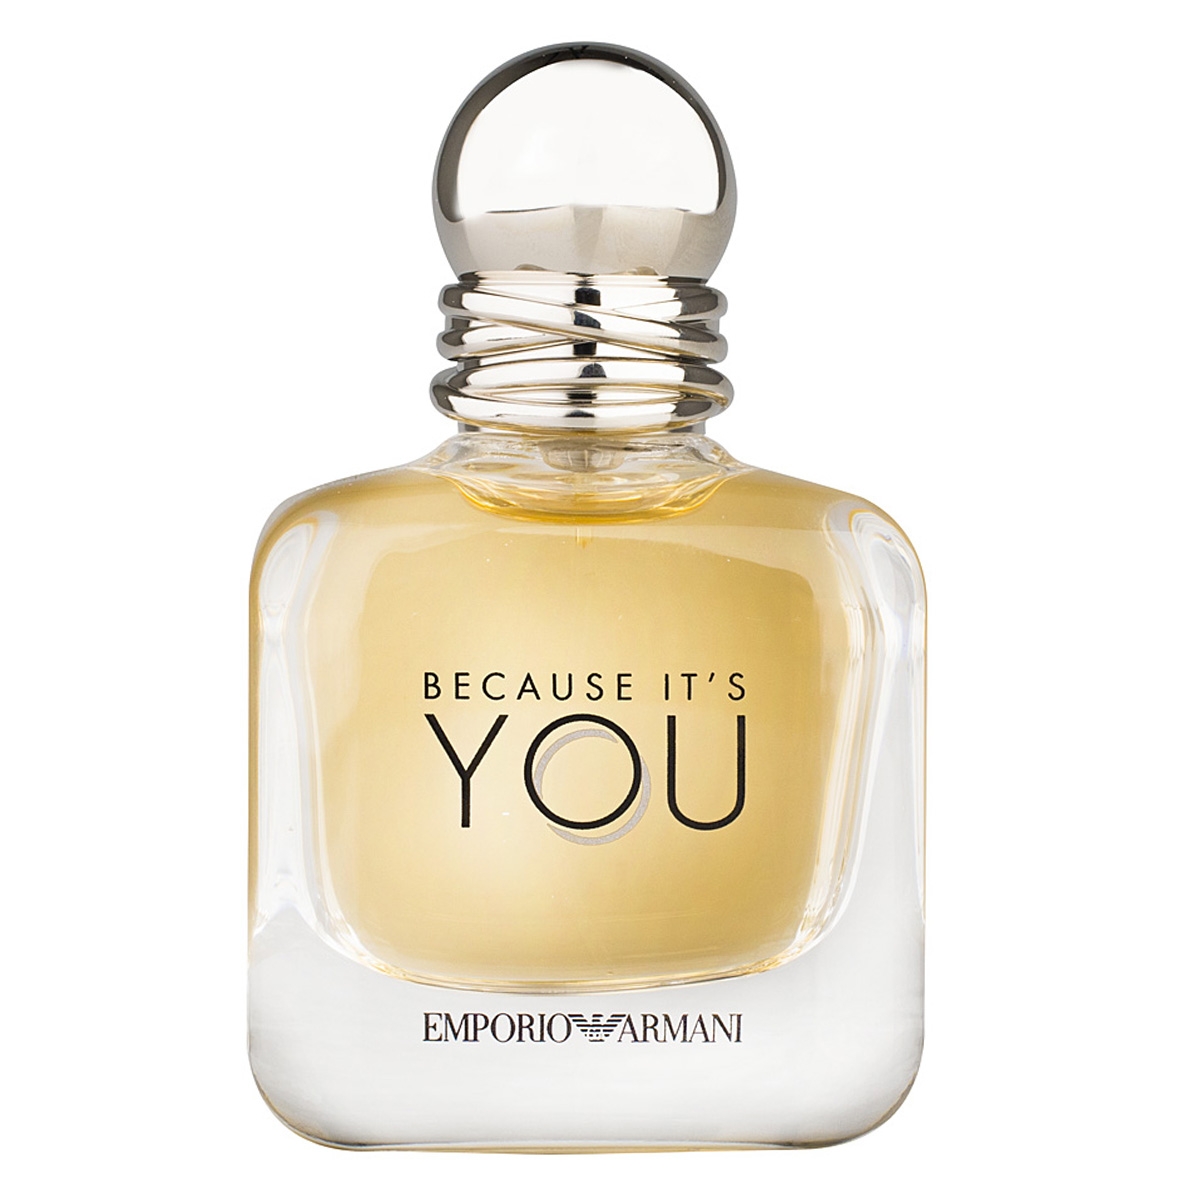 emporio armani because it's you eau de parfum 50ml